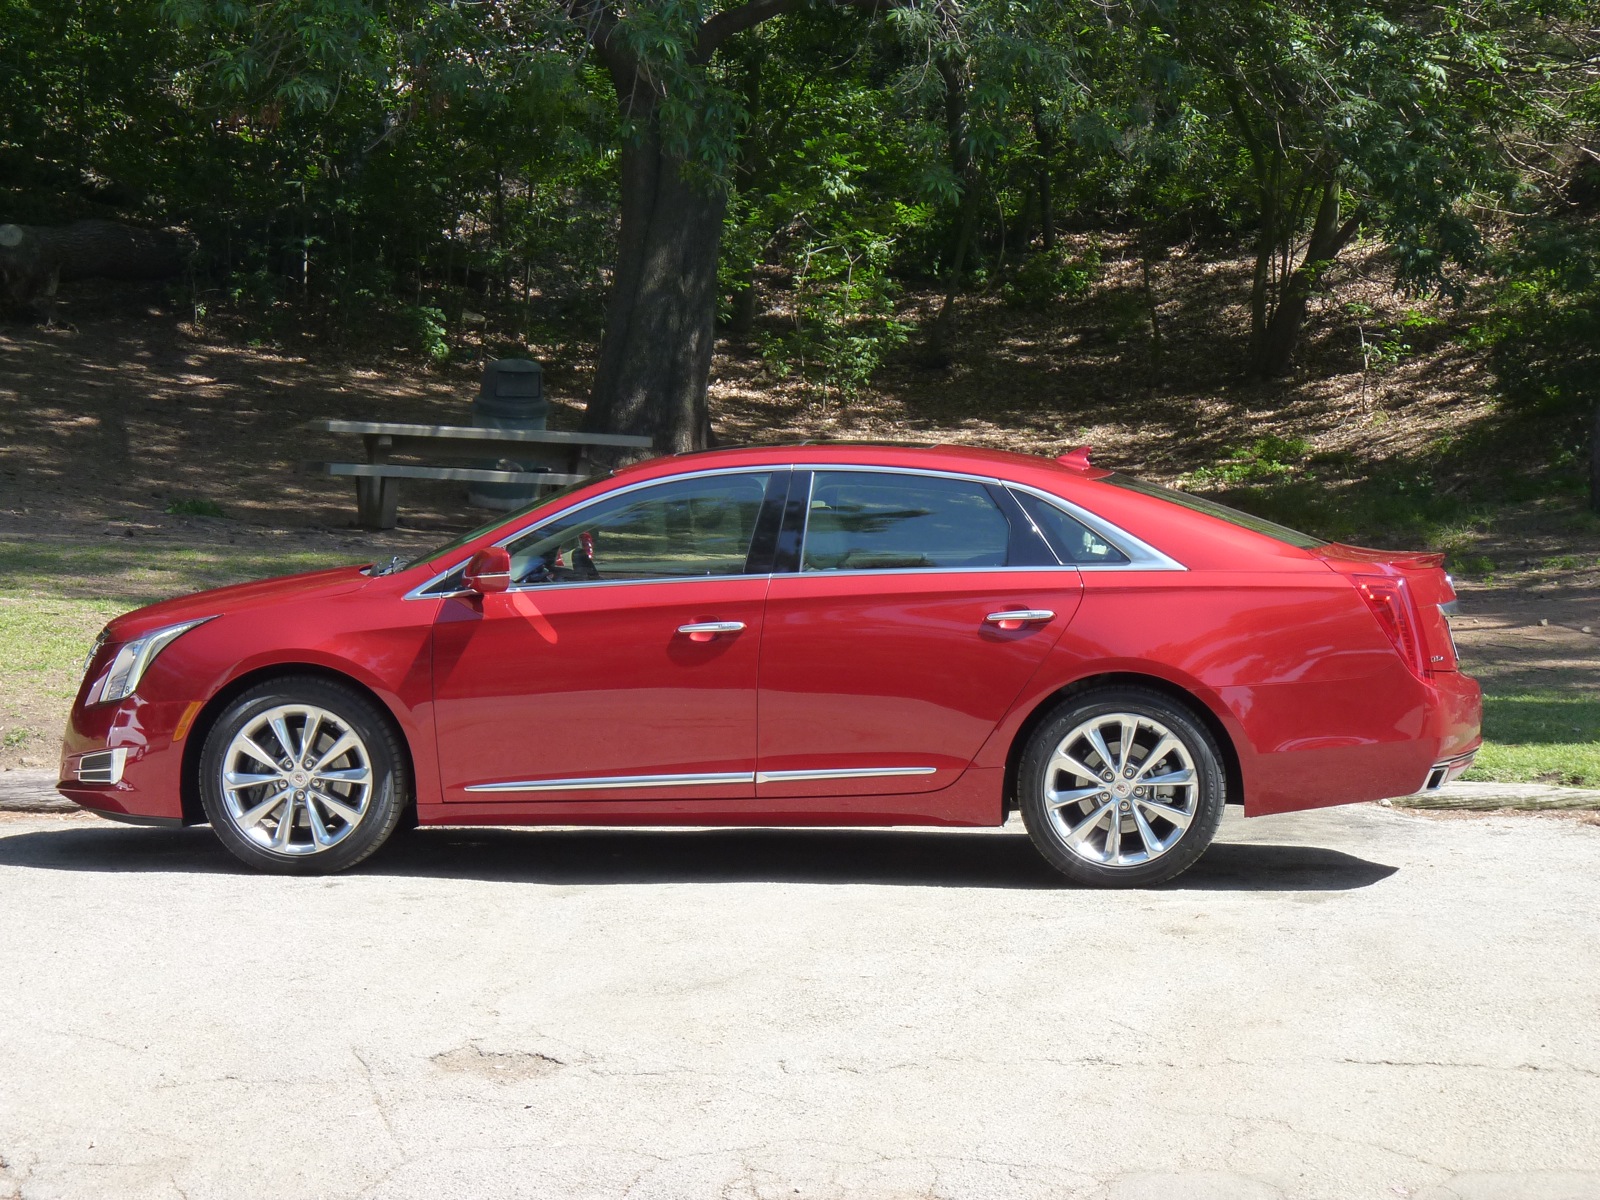 2013 Cadillac XTS first drive review